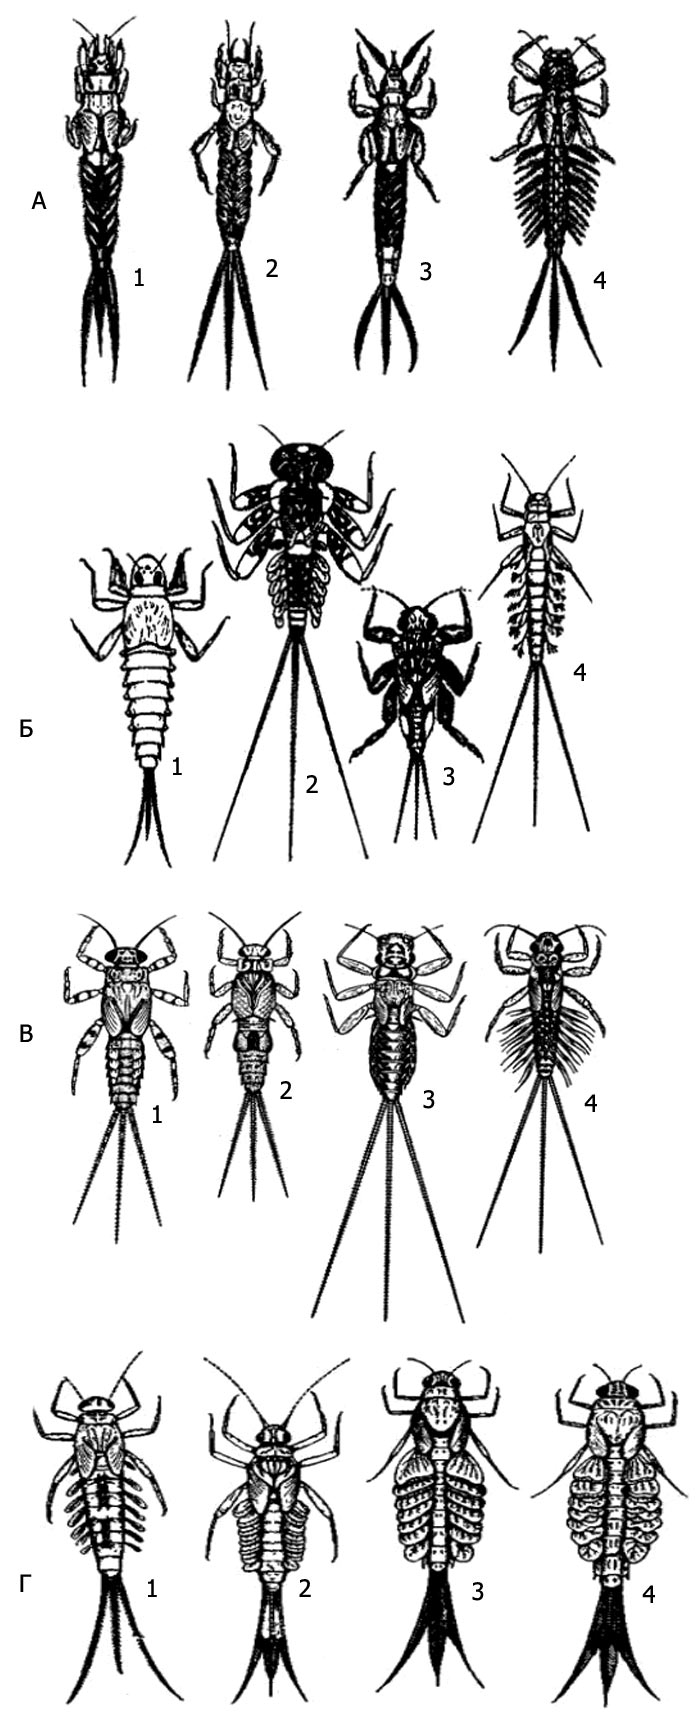    .  -   : 1  Palingenia longicauda, 2 - Polymitarcis virgo, 3  Ephemera vulgata, 4  Potamanthus luteus;  -      : 1  Oligoneuriella rhenana, 2  Ecdyonurus forcipula, 3  Torleya belgica, 4  Habrophlebia lauta;  -   : 1  Ephemerella ignita, 2  Caenis macrura, 3  Choroterpes picteti, 4  Paraleptophlebia submarginata;  -   : 1  Baetis bioculatus, 2  Cloeon dipterum, 3  Siphlonurus aestivalis, 4  Siphlurella linneana